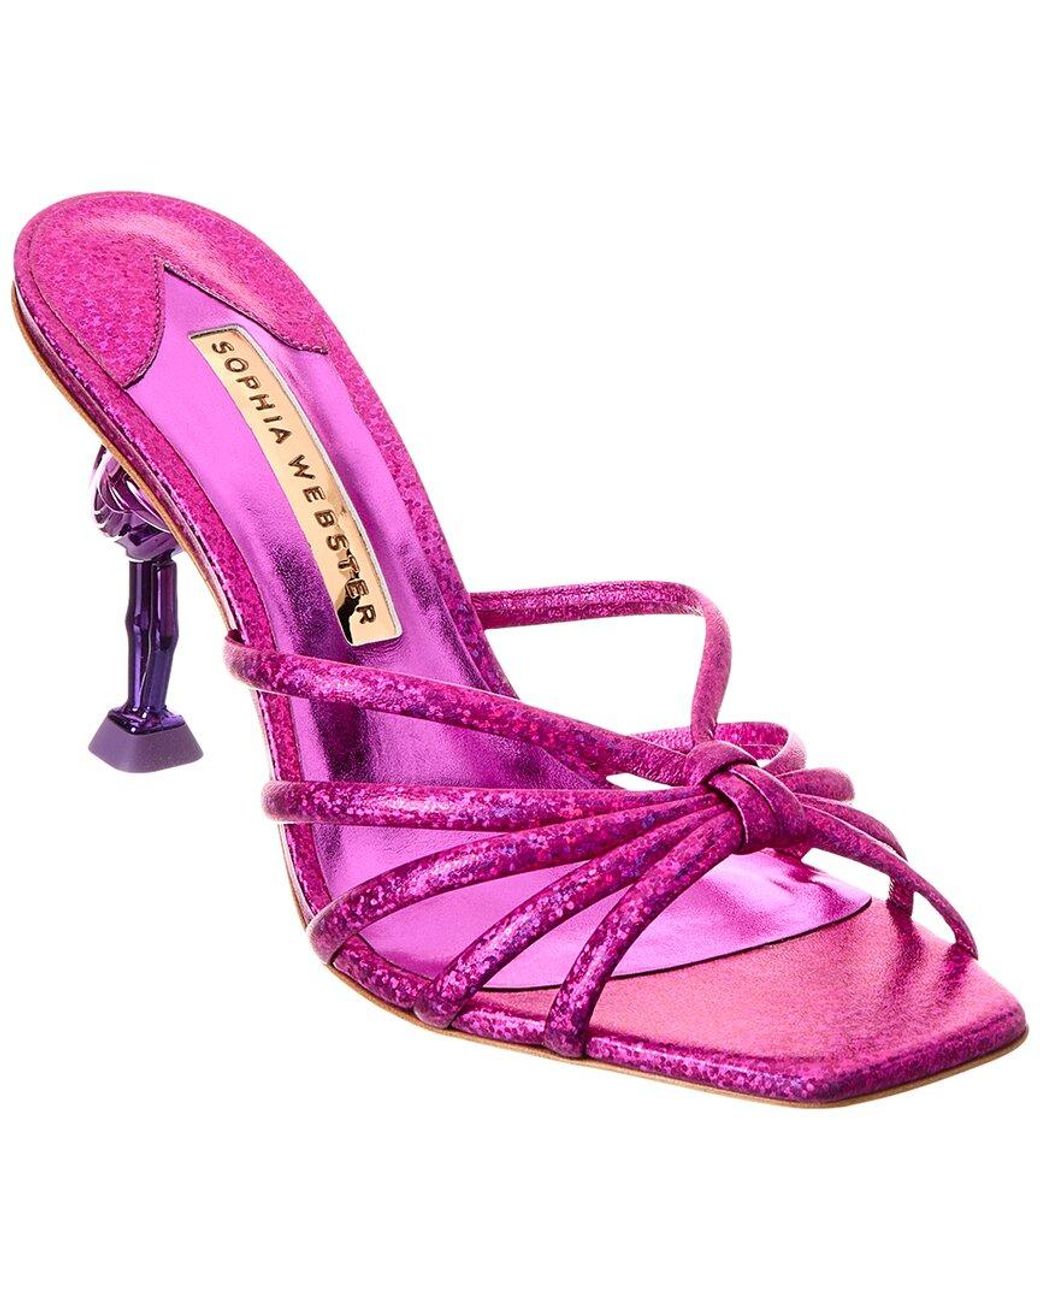 Sophia Webster Flo Flamingo Leather Sandal in Pink | Lyst